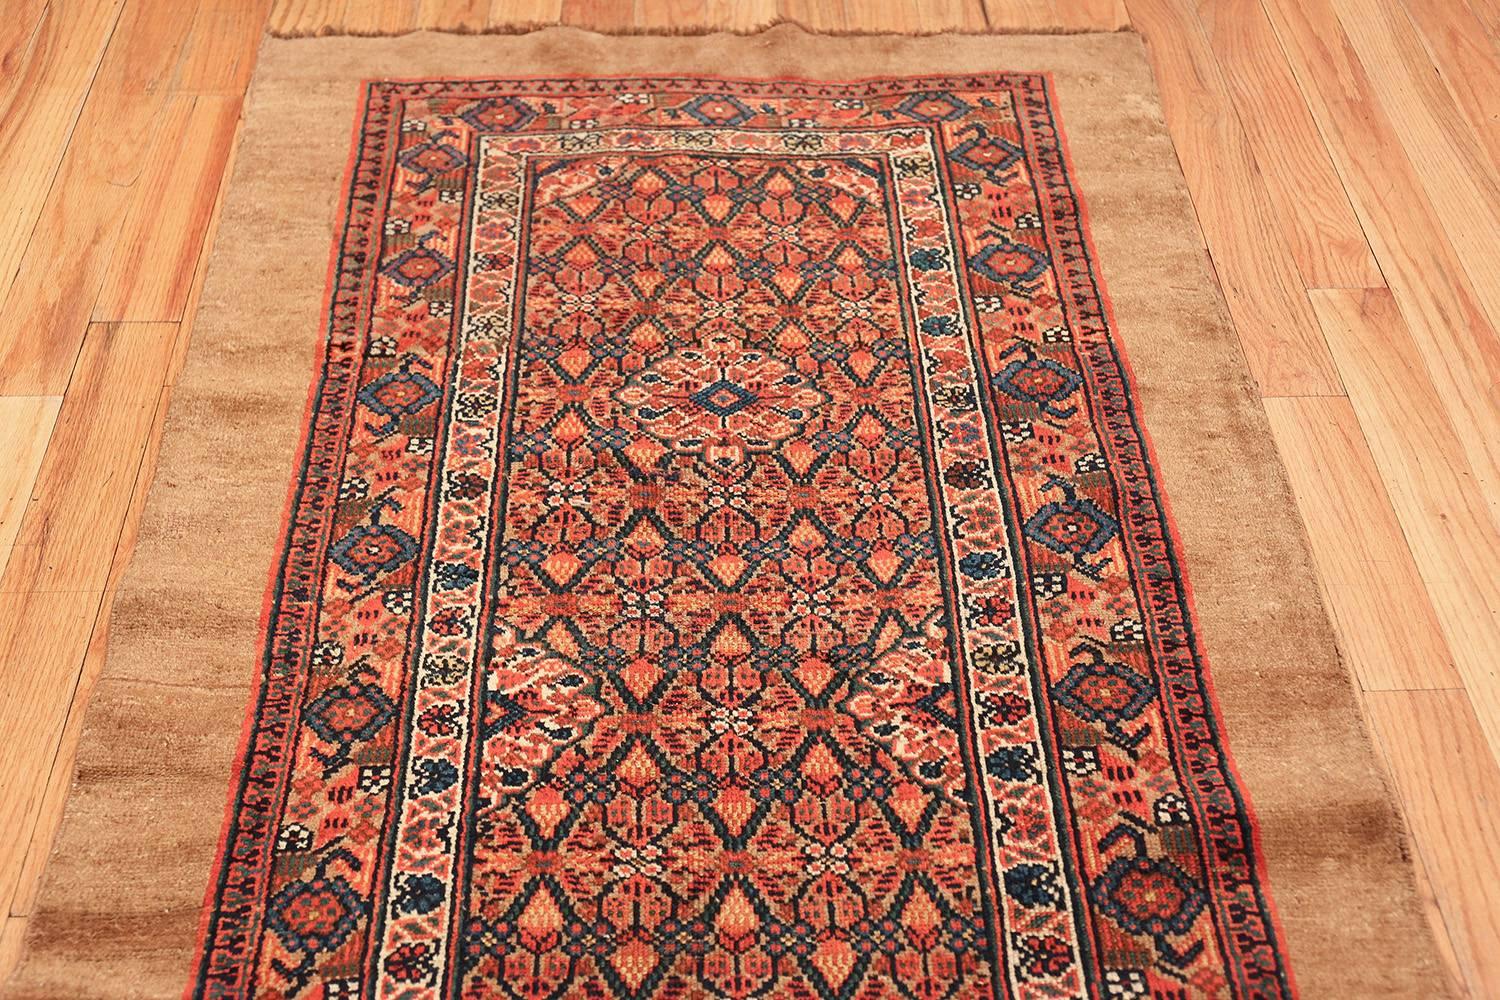 20th Century Long and Narrow Antique Tribal Persian Serab Runner Rug